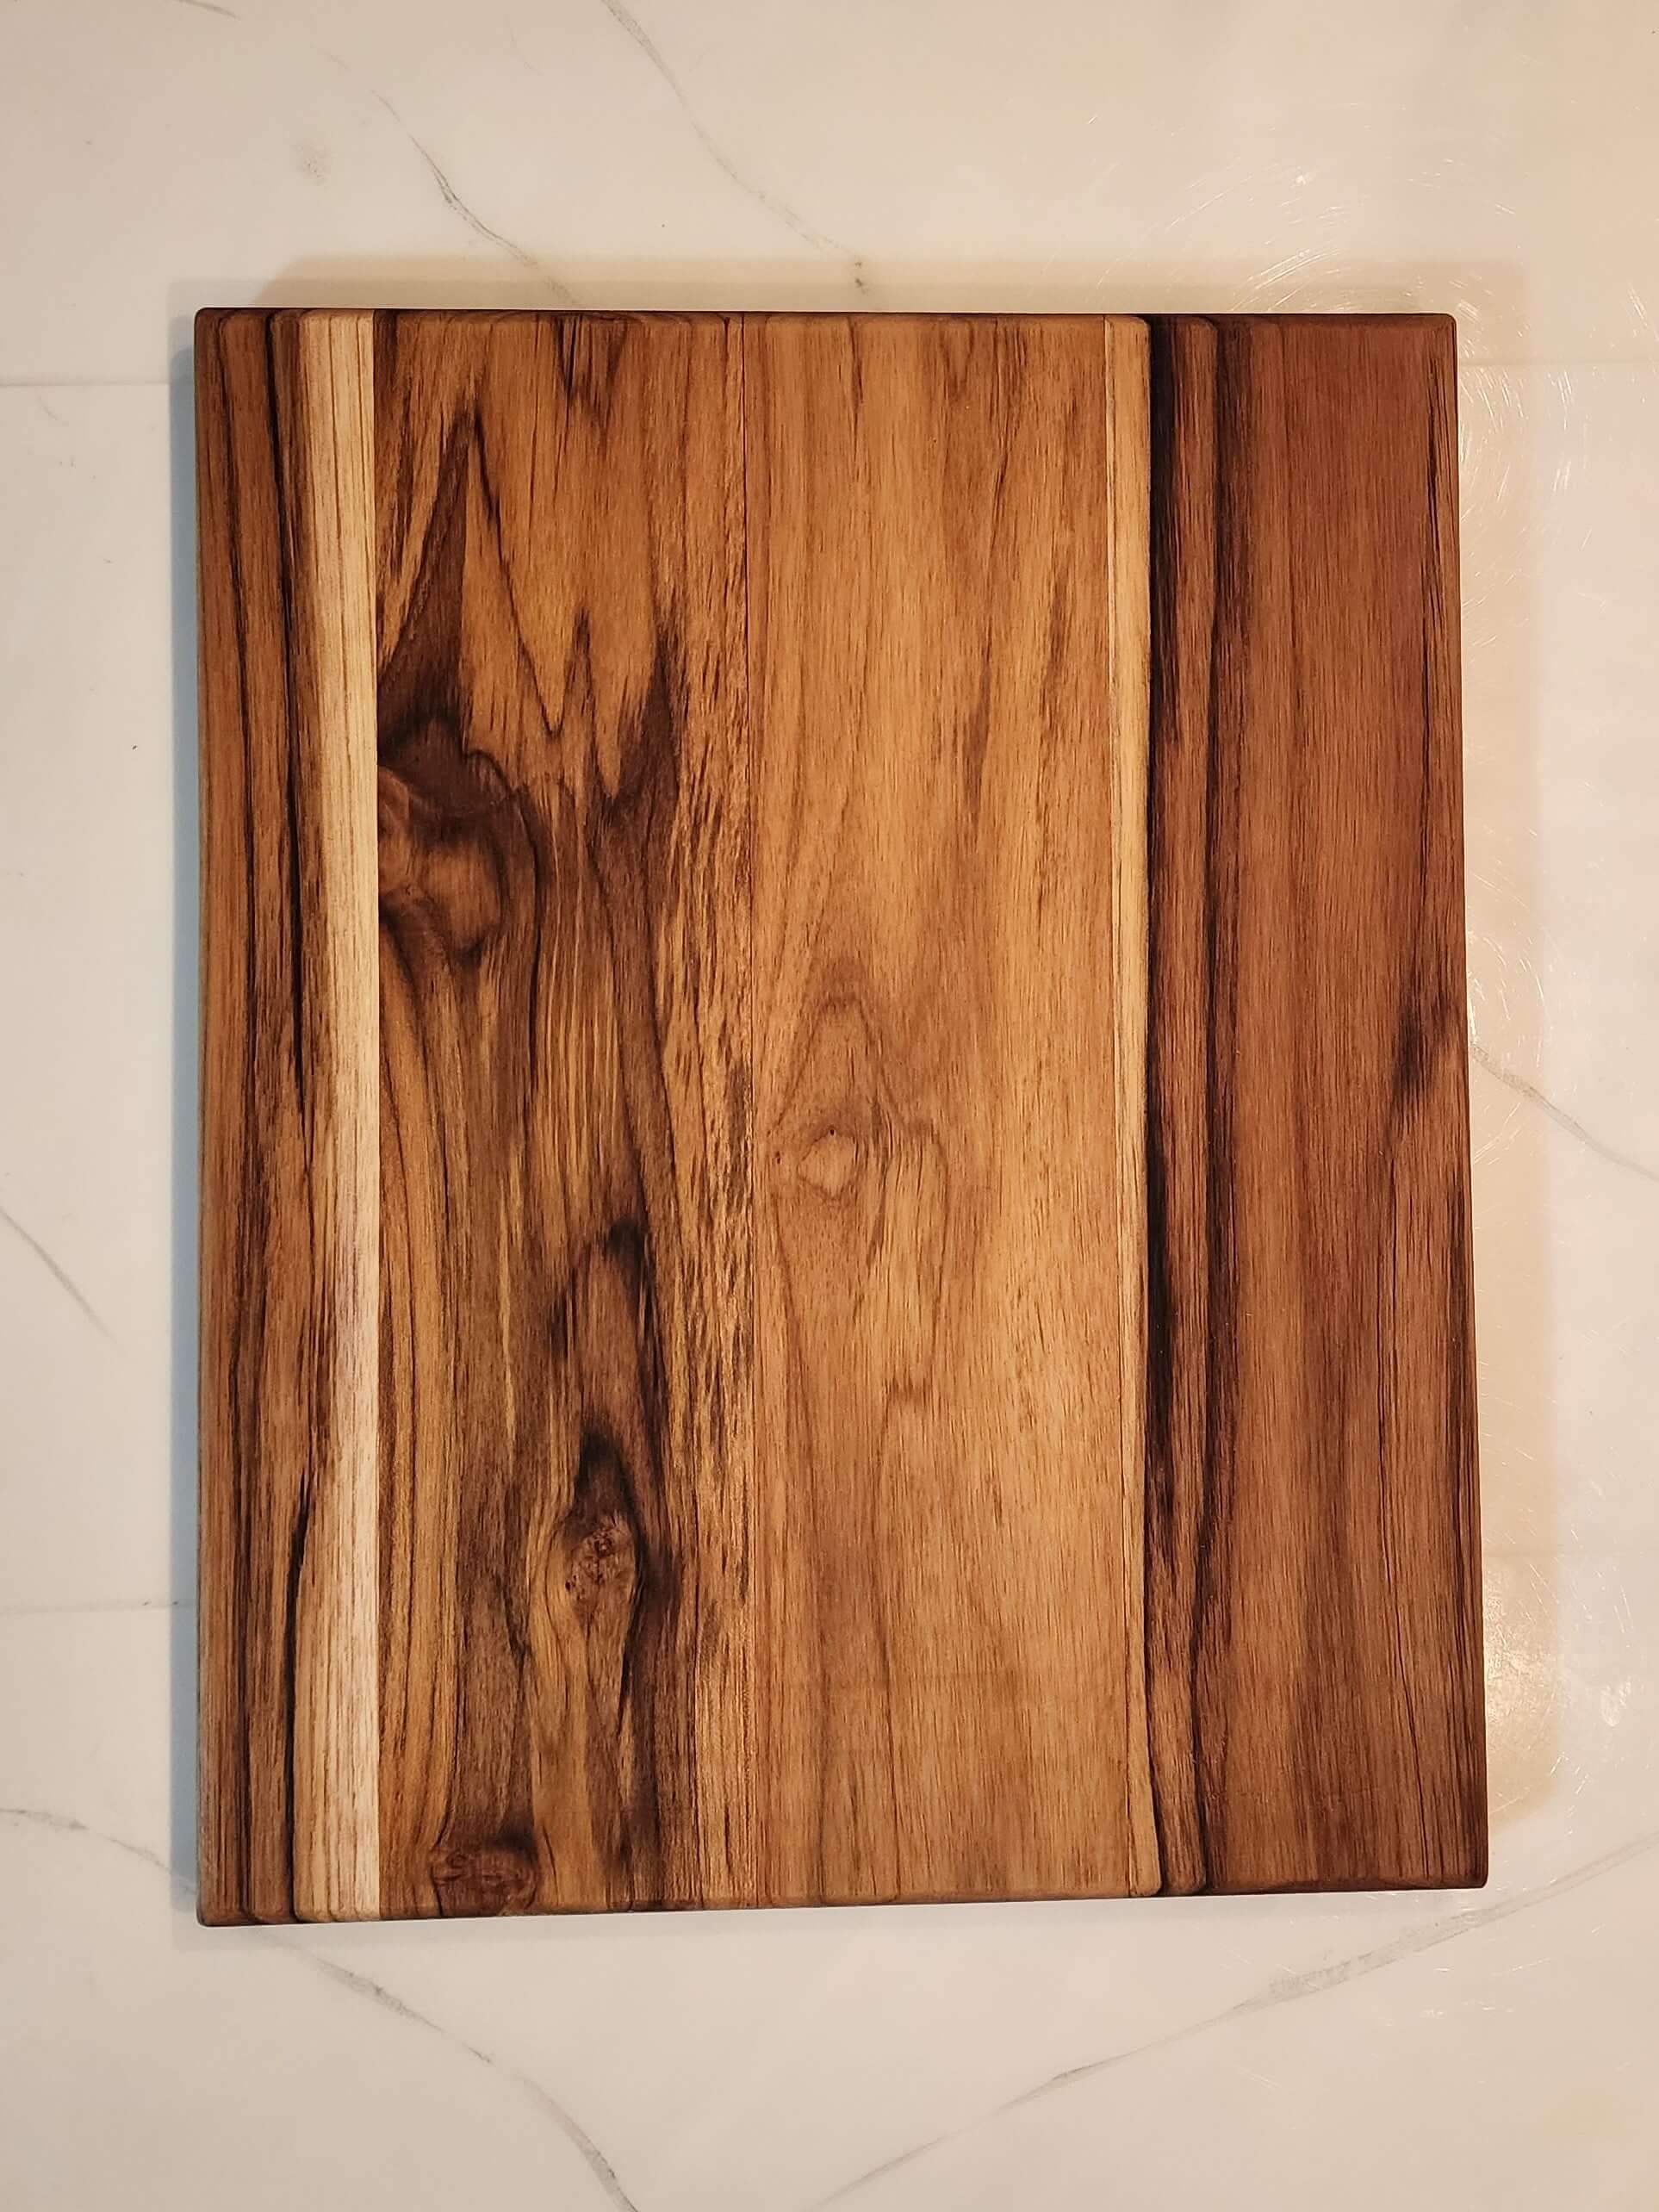 Handmade Teak Cutting Board - 15X12